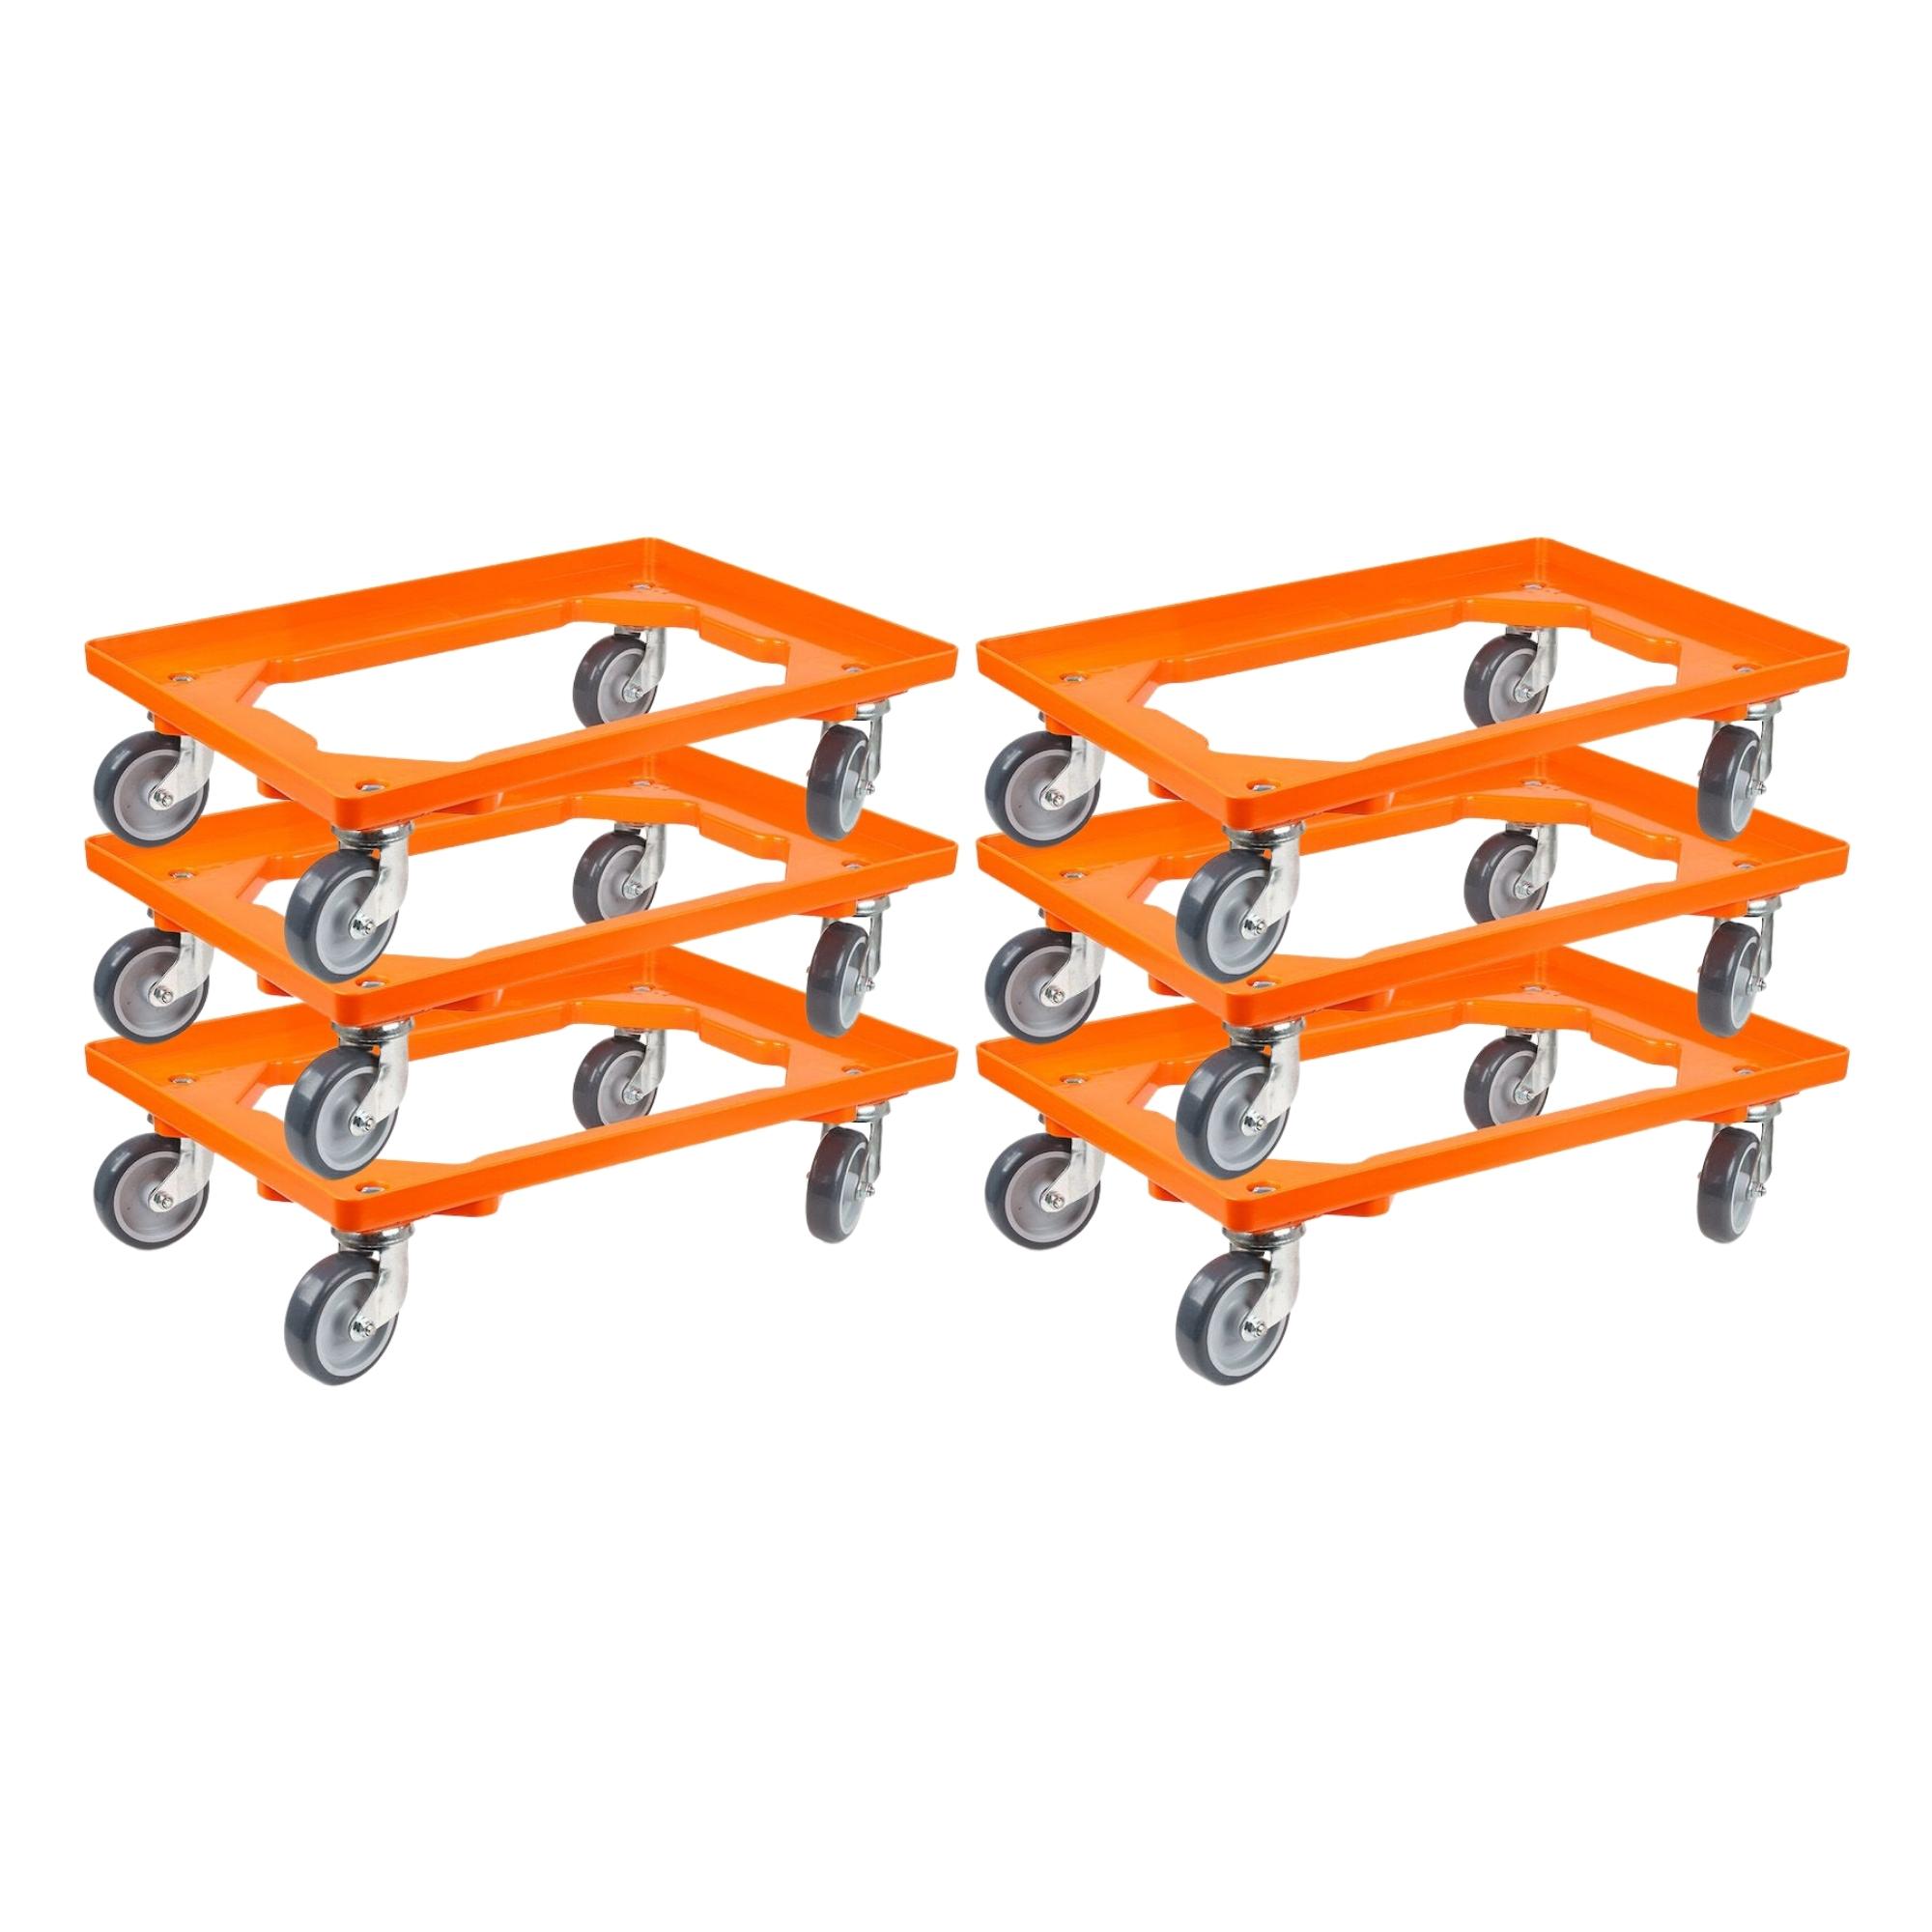 Transportroller für Euroboxen 60x40cm mit Gummiräder orange | Offenes Deck | 2 Lenkrollen & 2 Bremsrollen | Traglast 300kg | Kistenroller Logistikroller Rollwagen Profi-Fahrgestell